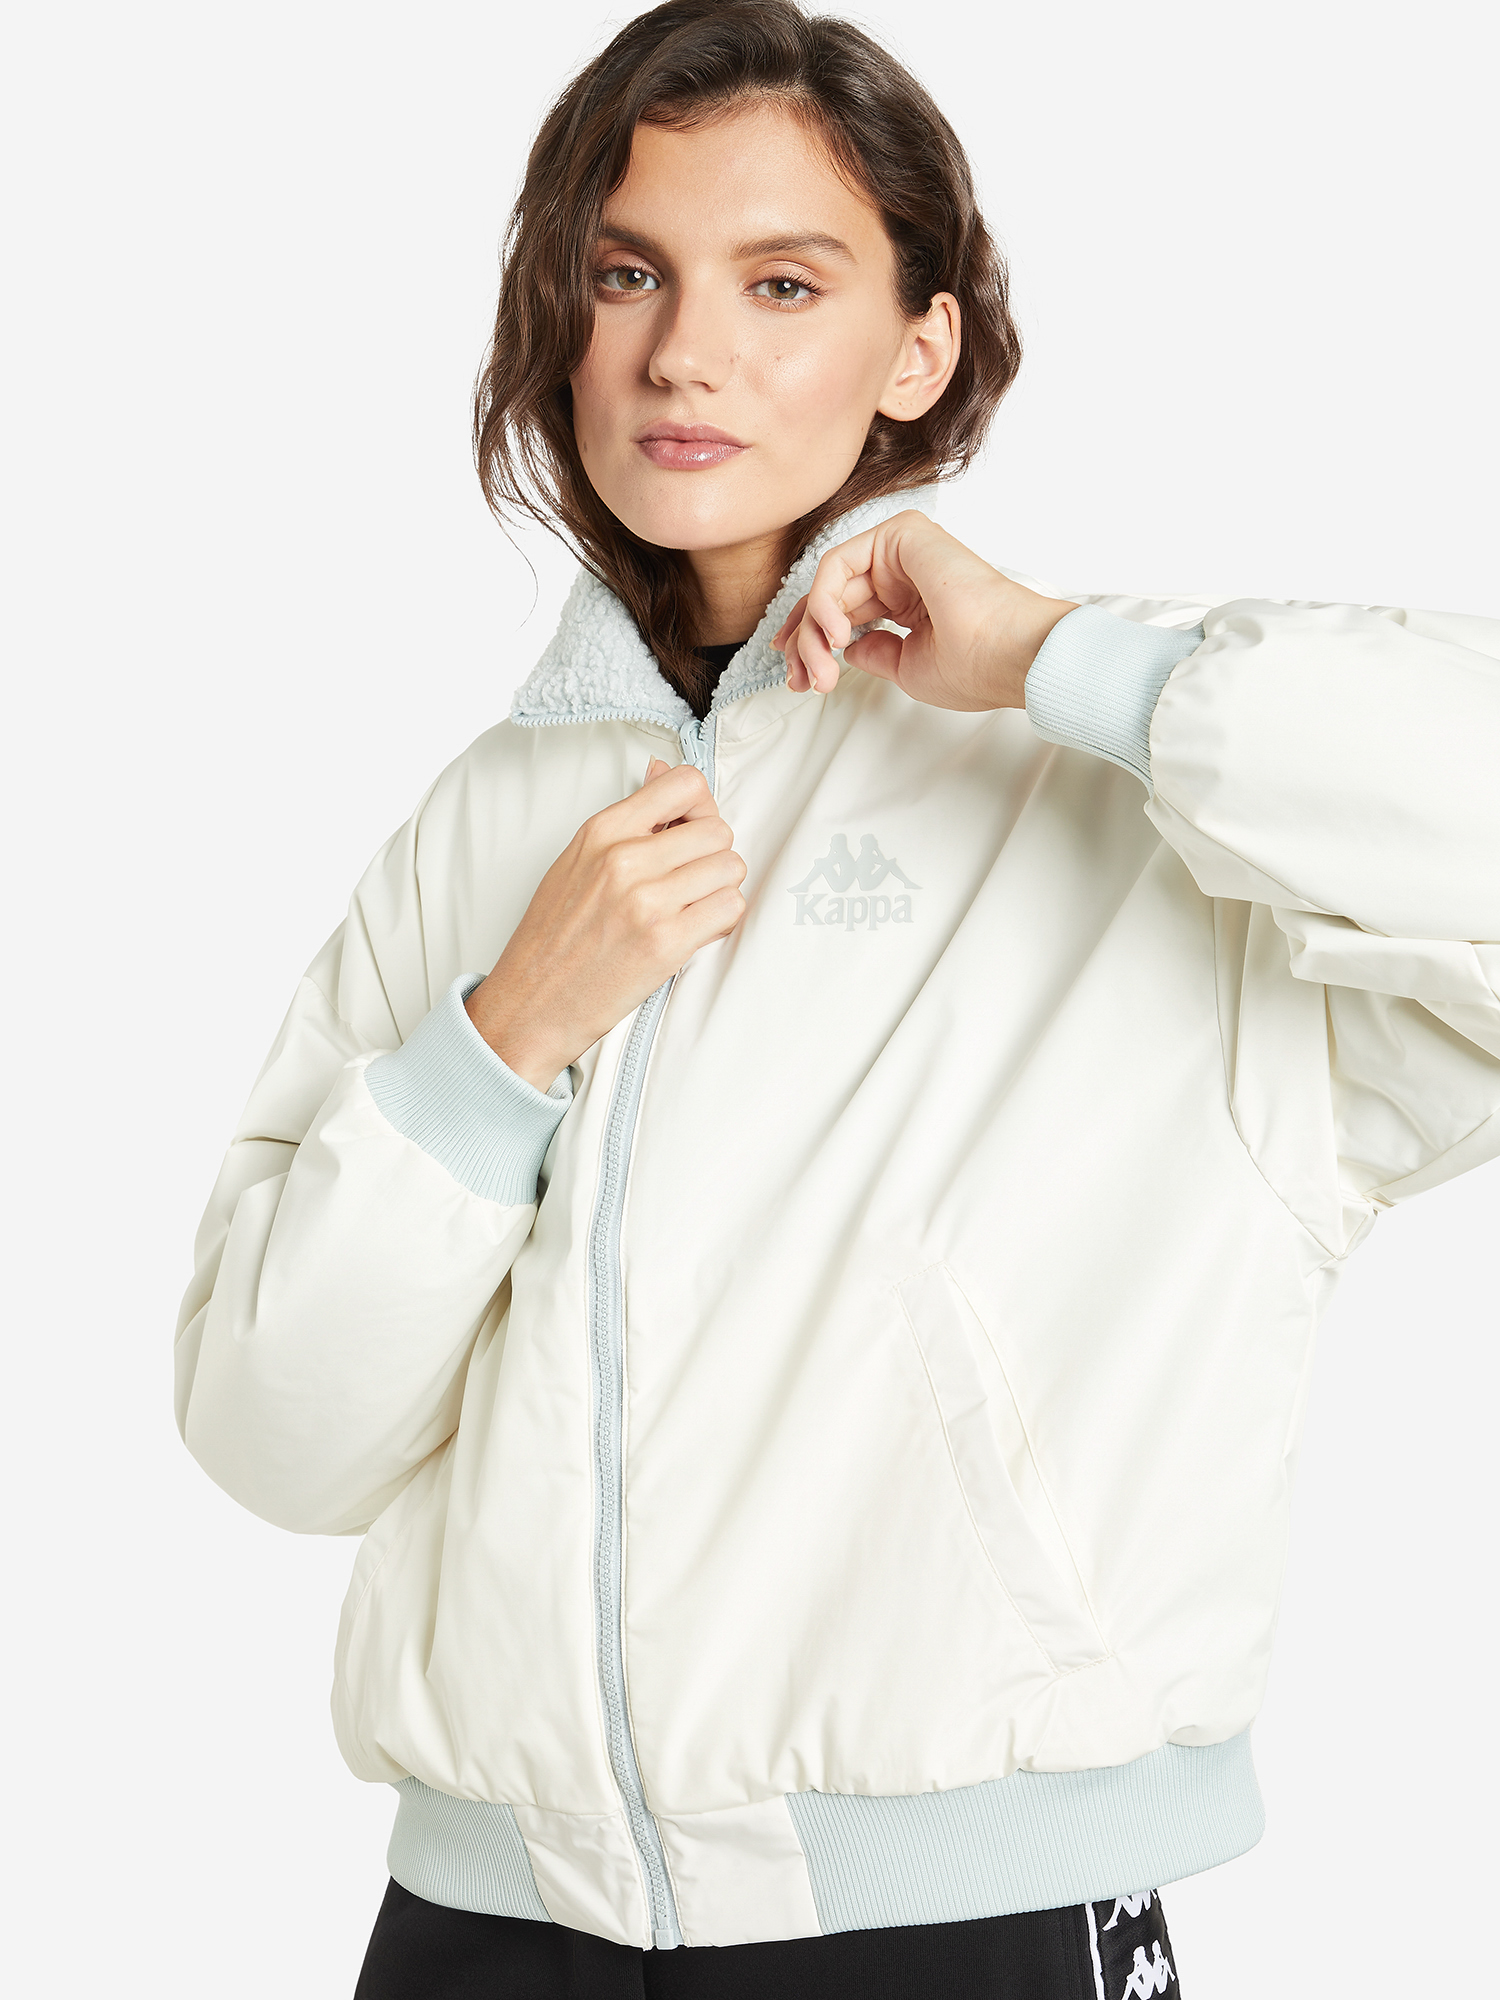 фото Куртка женская kappa, бежевый, размер 50-52